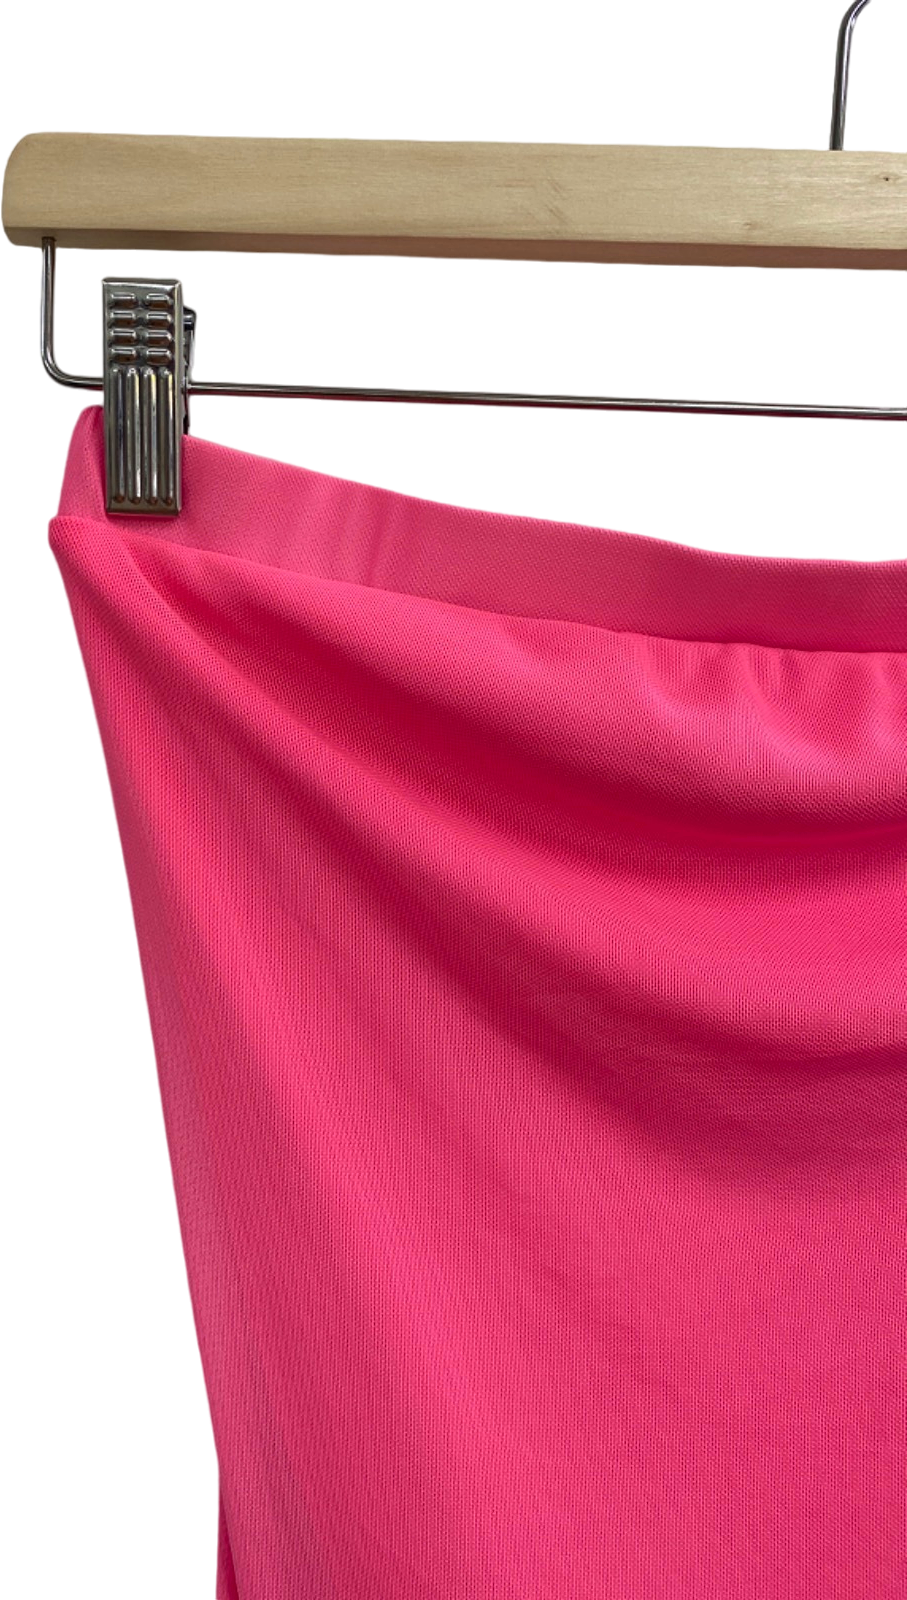 Fashion Nova Pink Bandeau Dress with Built-in Bodysuit UK S